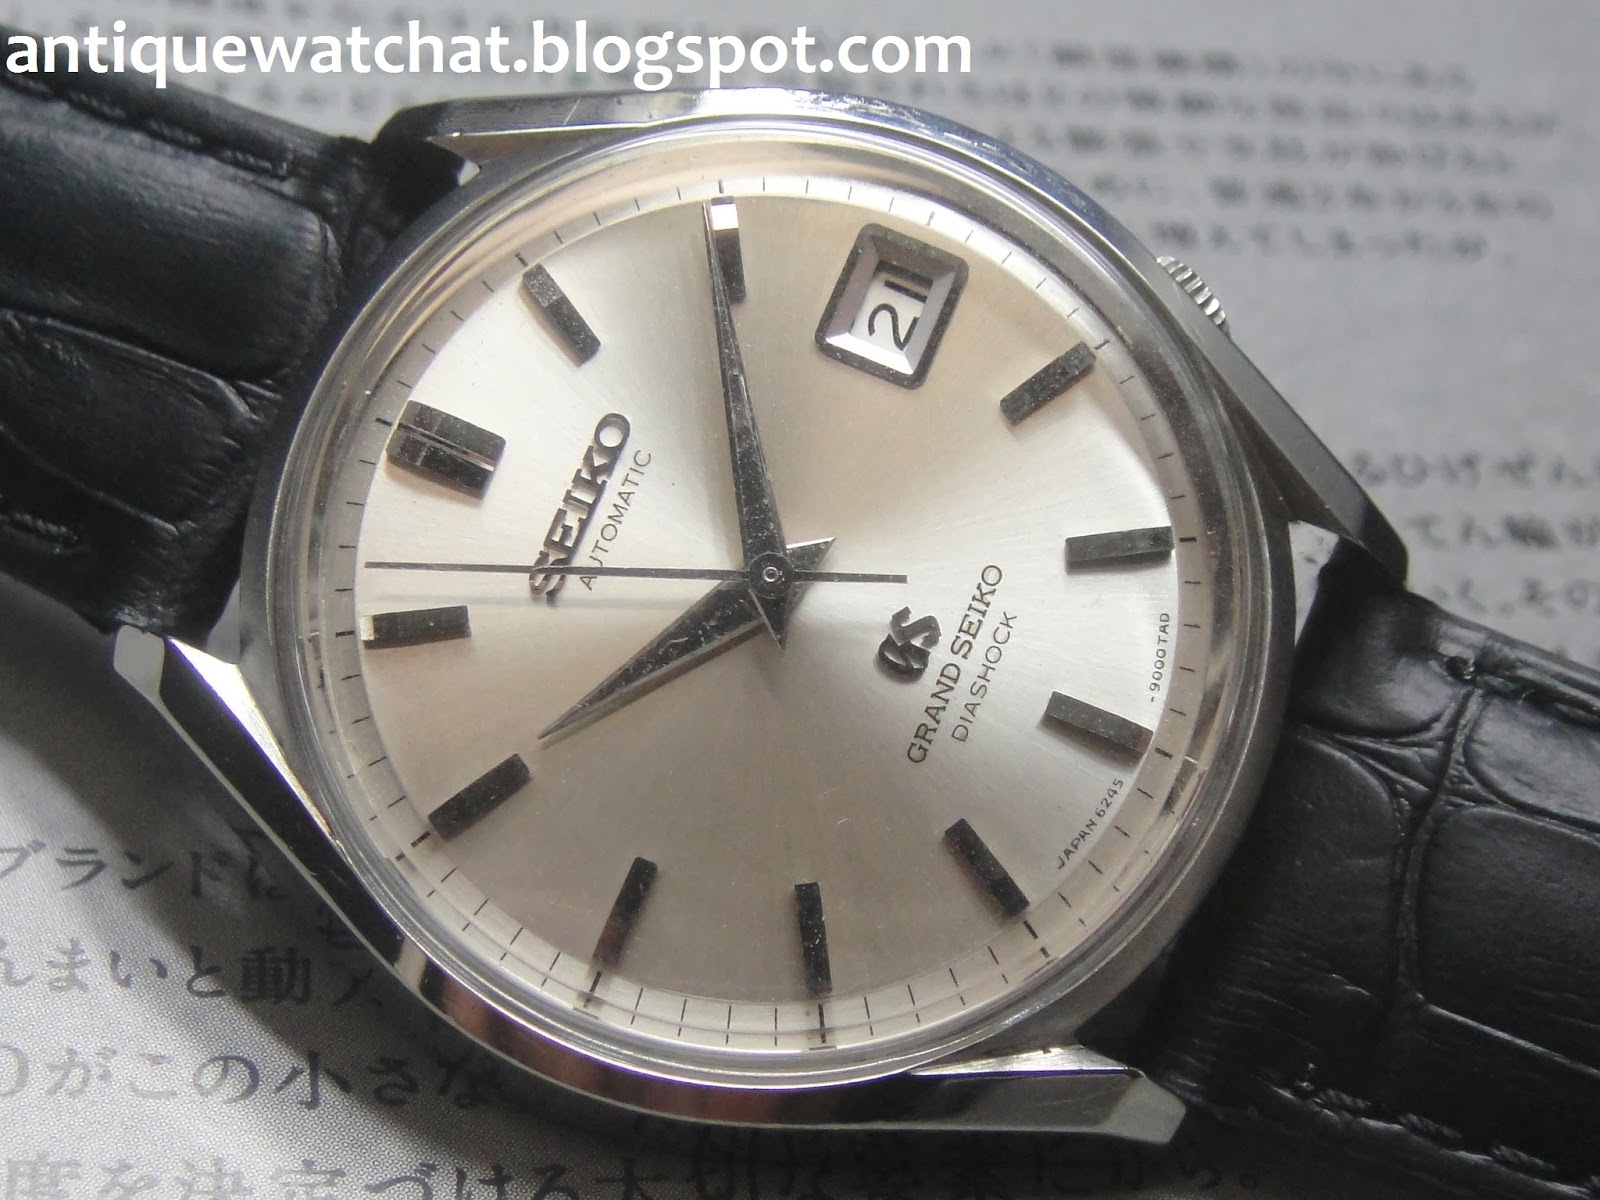 Antique Watch Bar: GRAND SEIKO DIASHOCK 6245-9000 GS17 (SOLD)